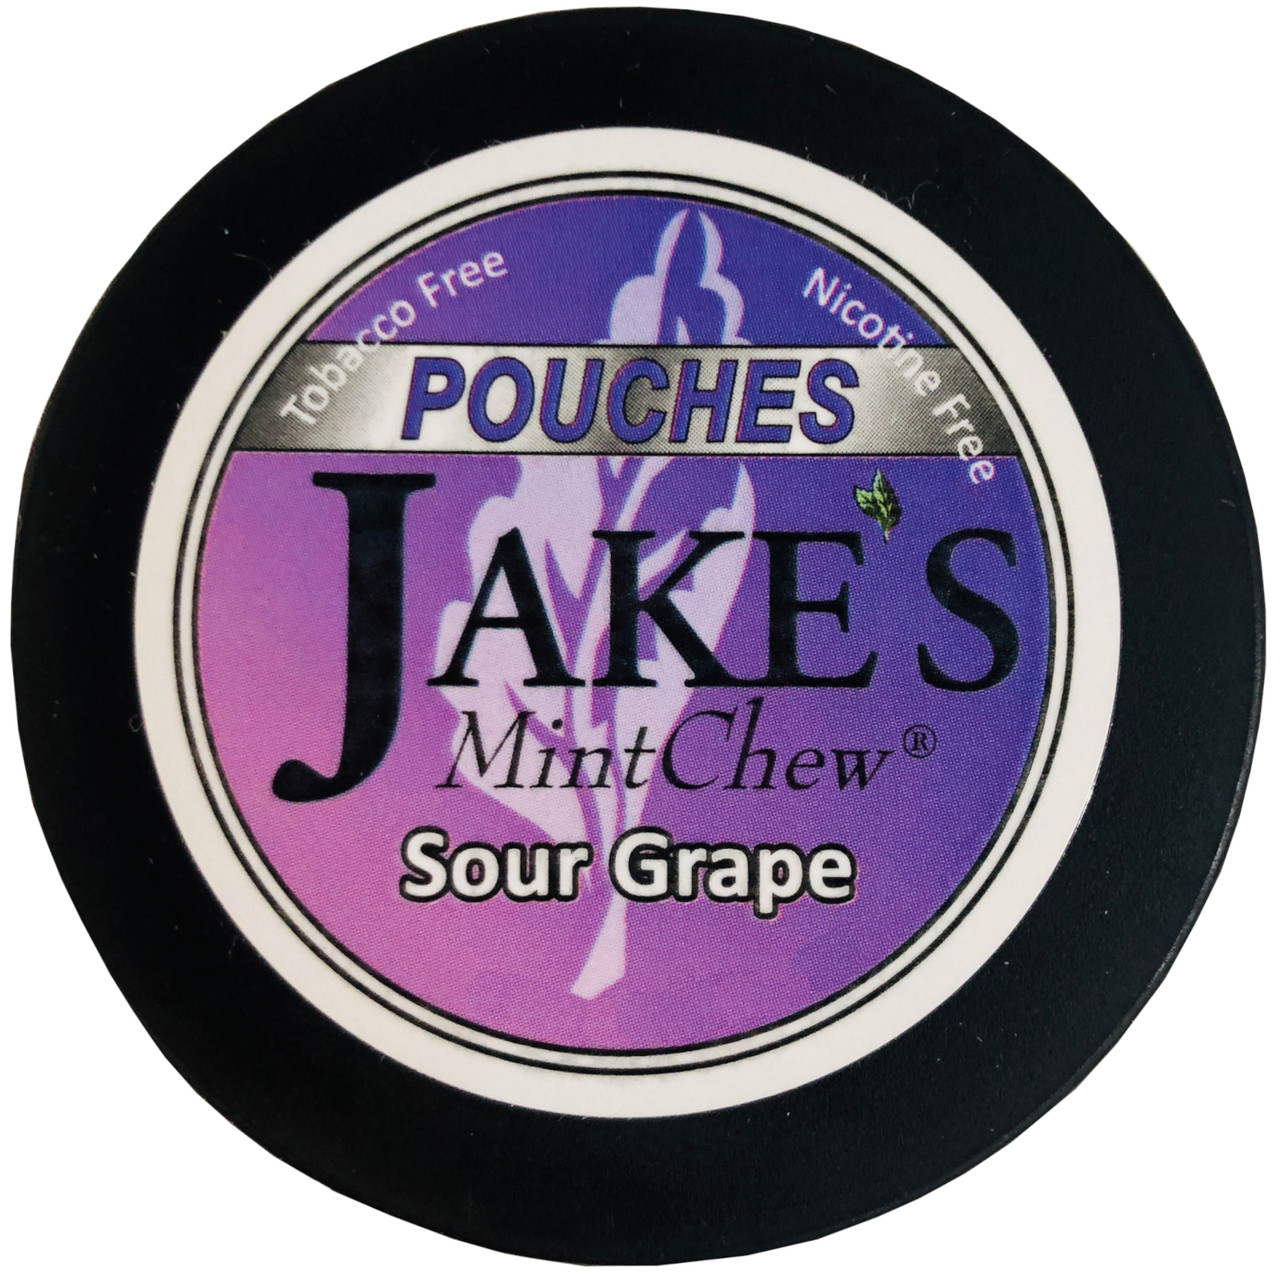 Jake's Mint Chew Pouches Sour Grape 1 Can